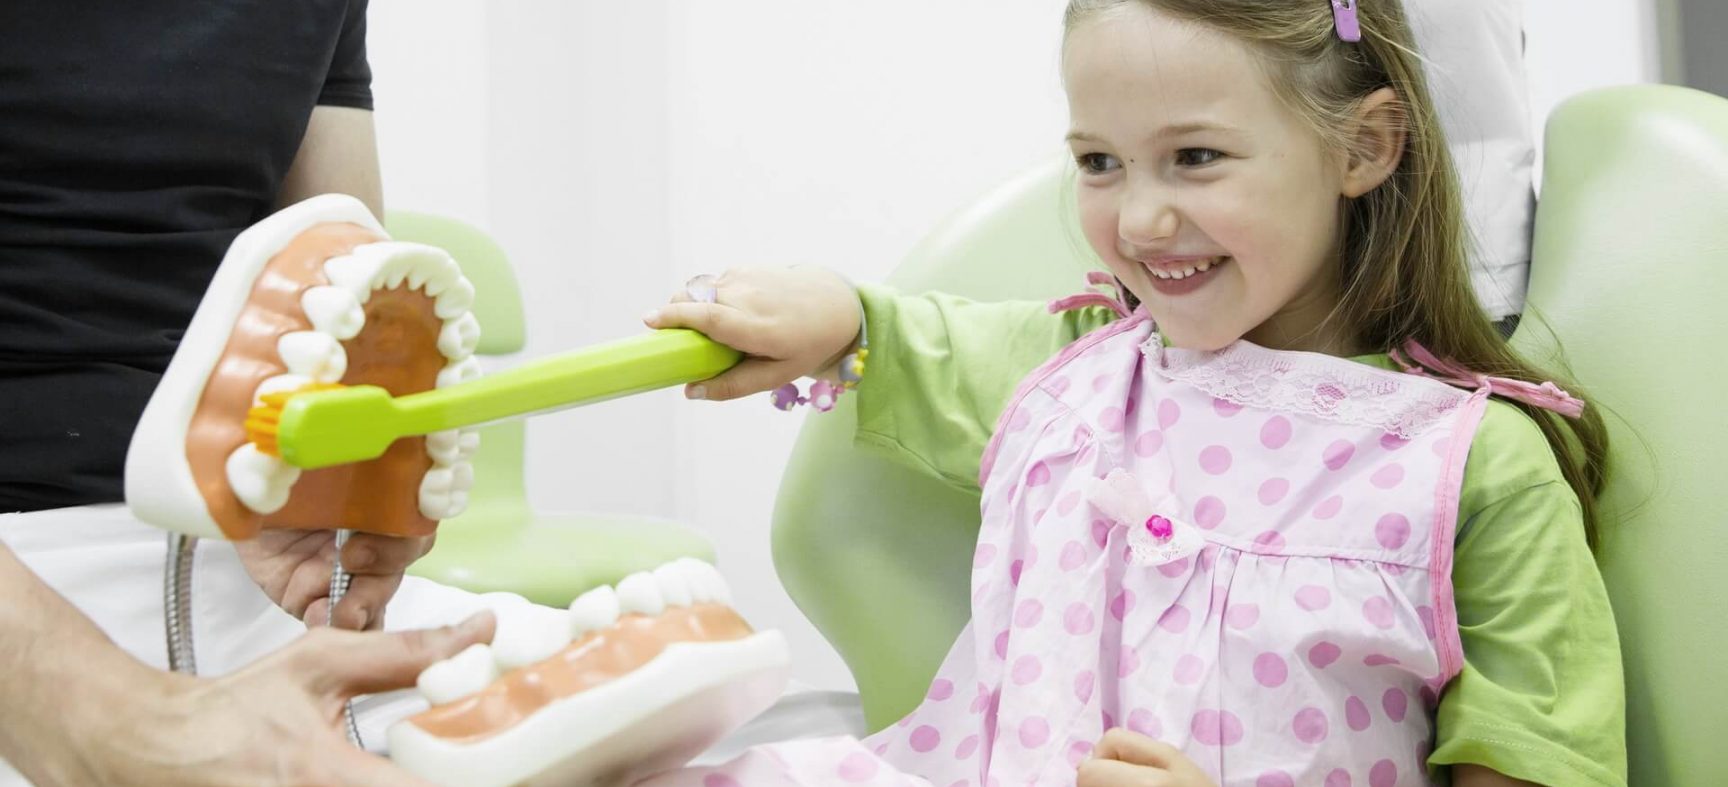 Most Basic Dental Care Tips for Kids